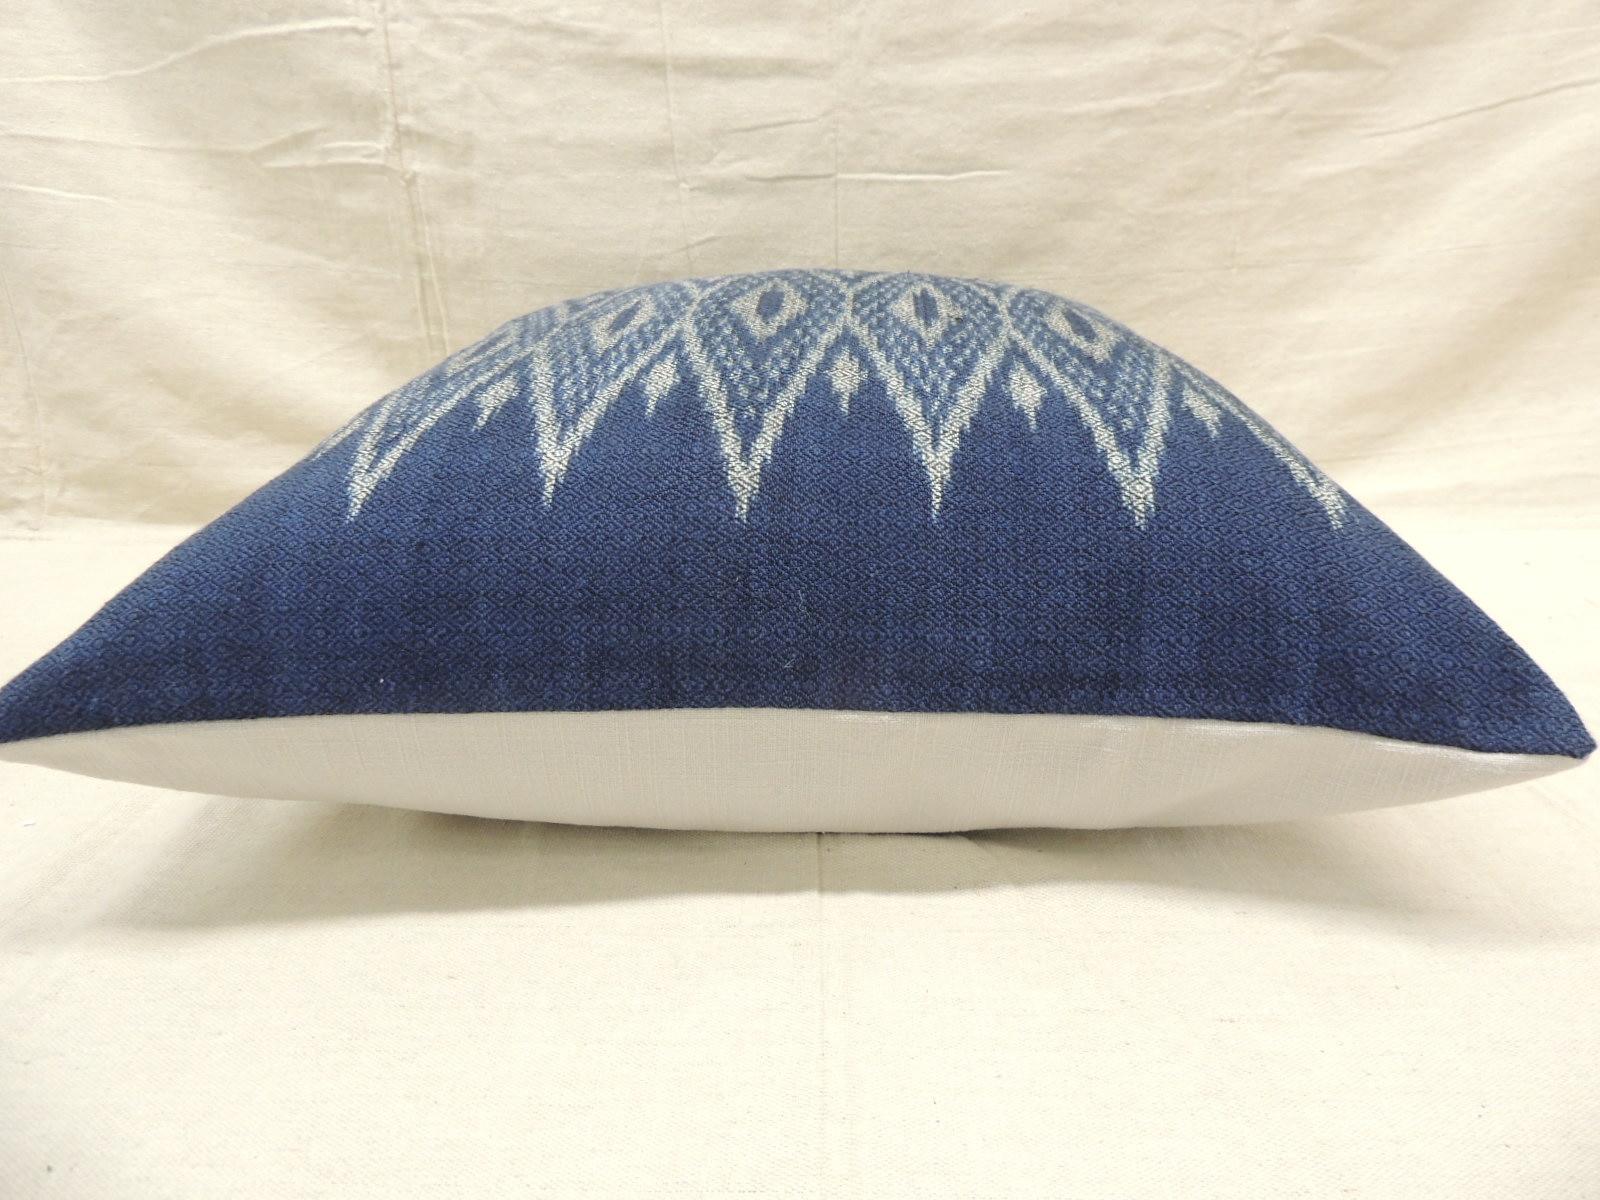 Bohemian Vintage Woven Blue and White Ikat Decorative Square Pillow